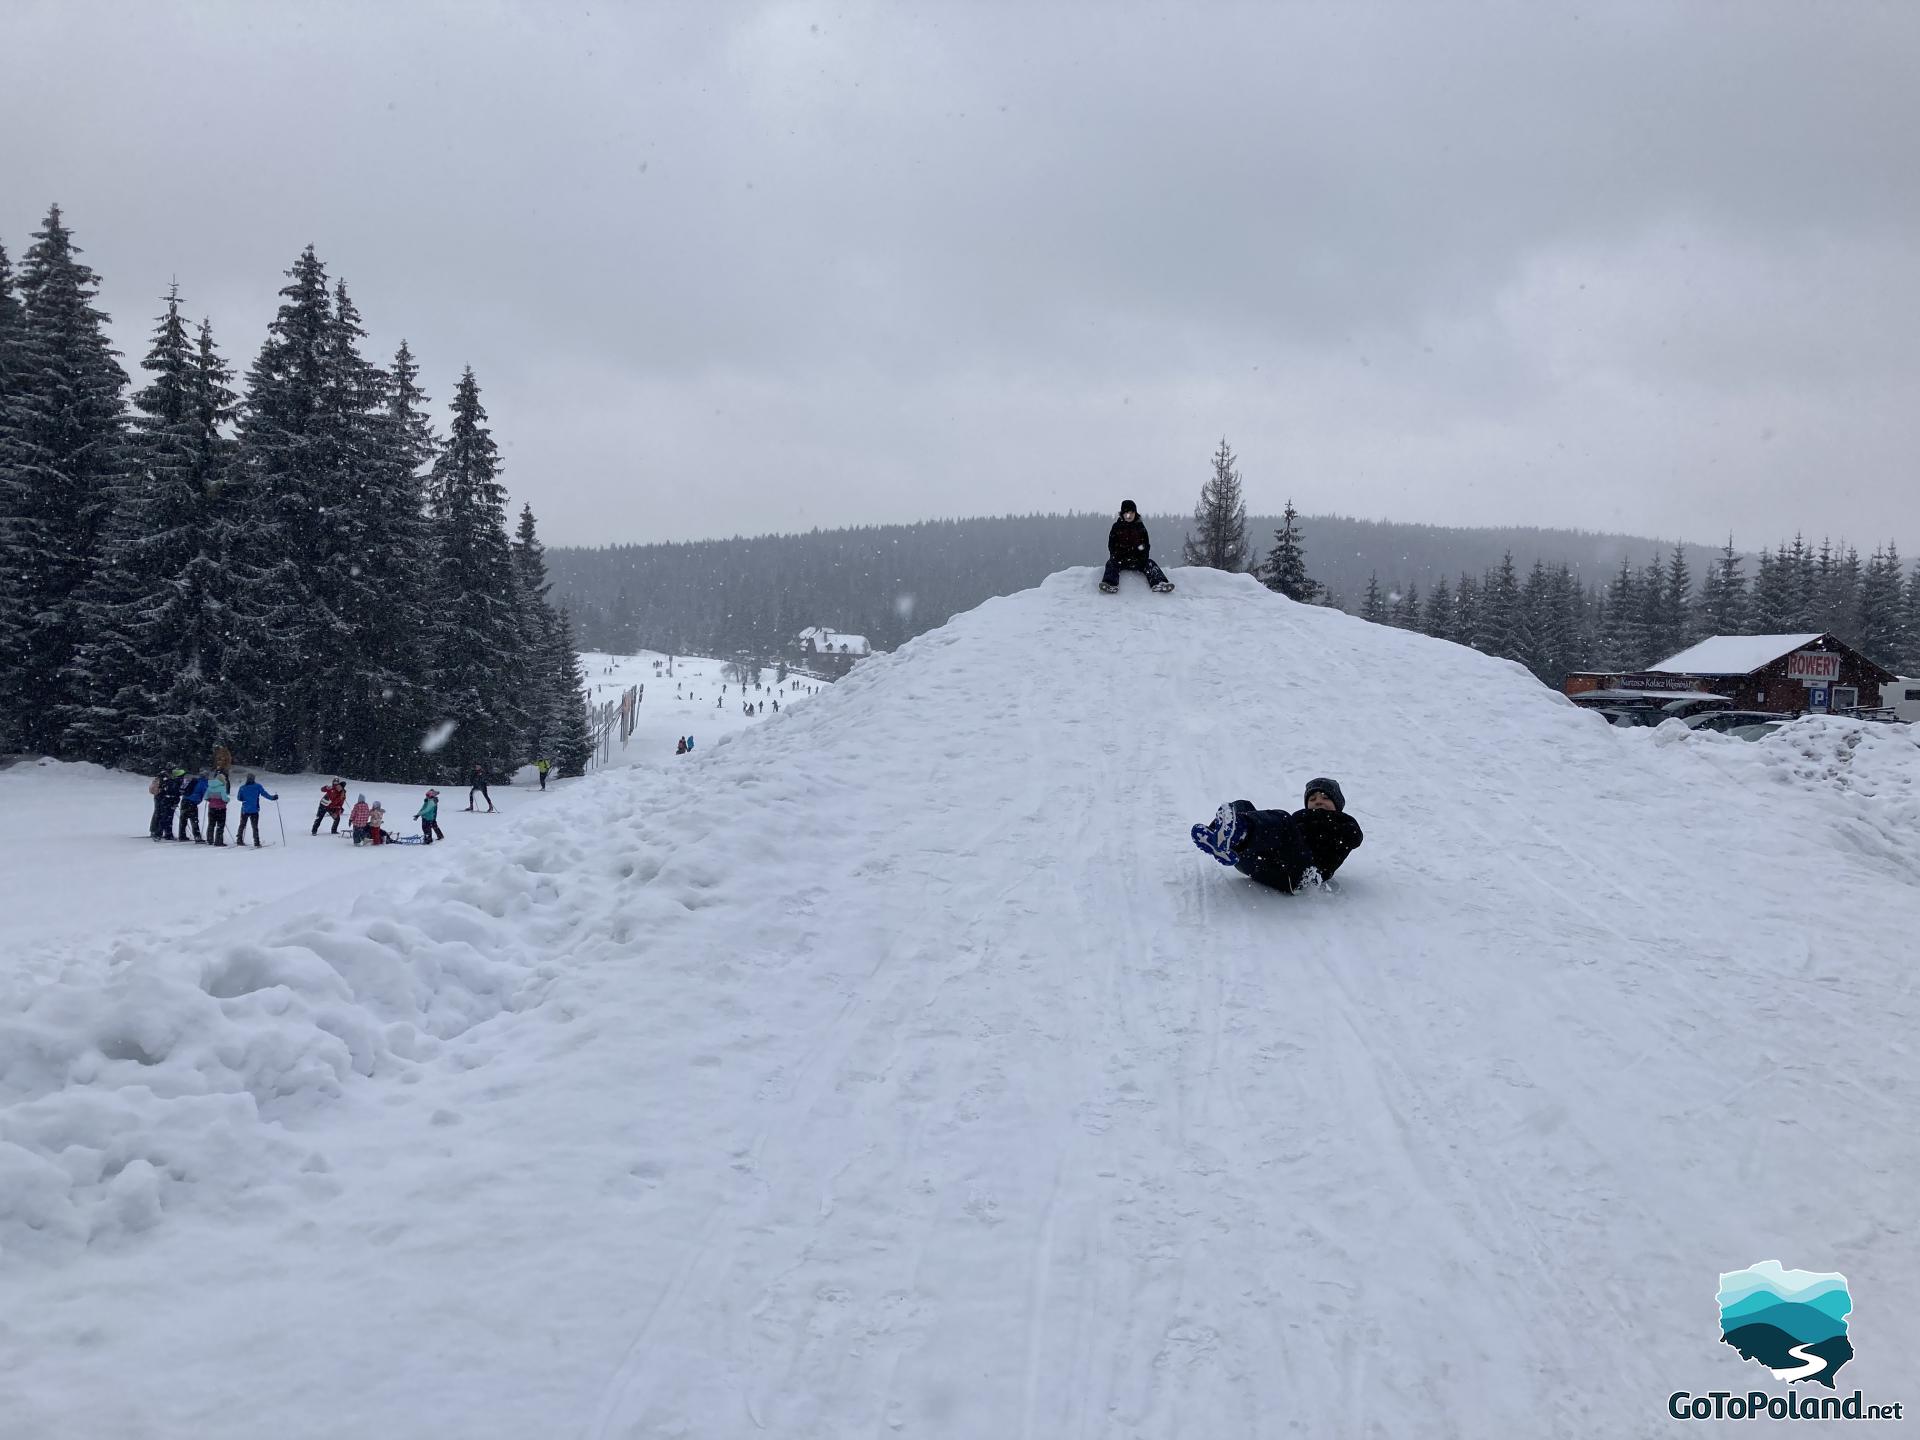 Two boys sledding down a small hill